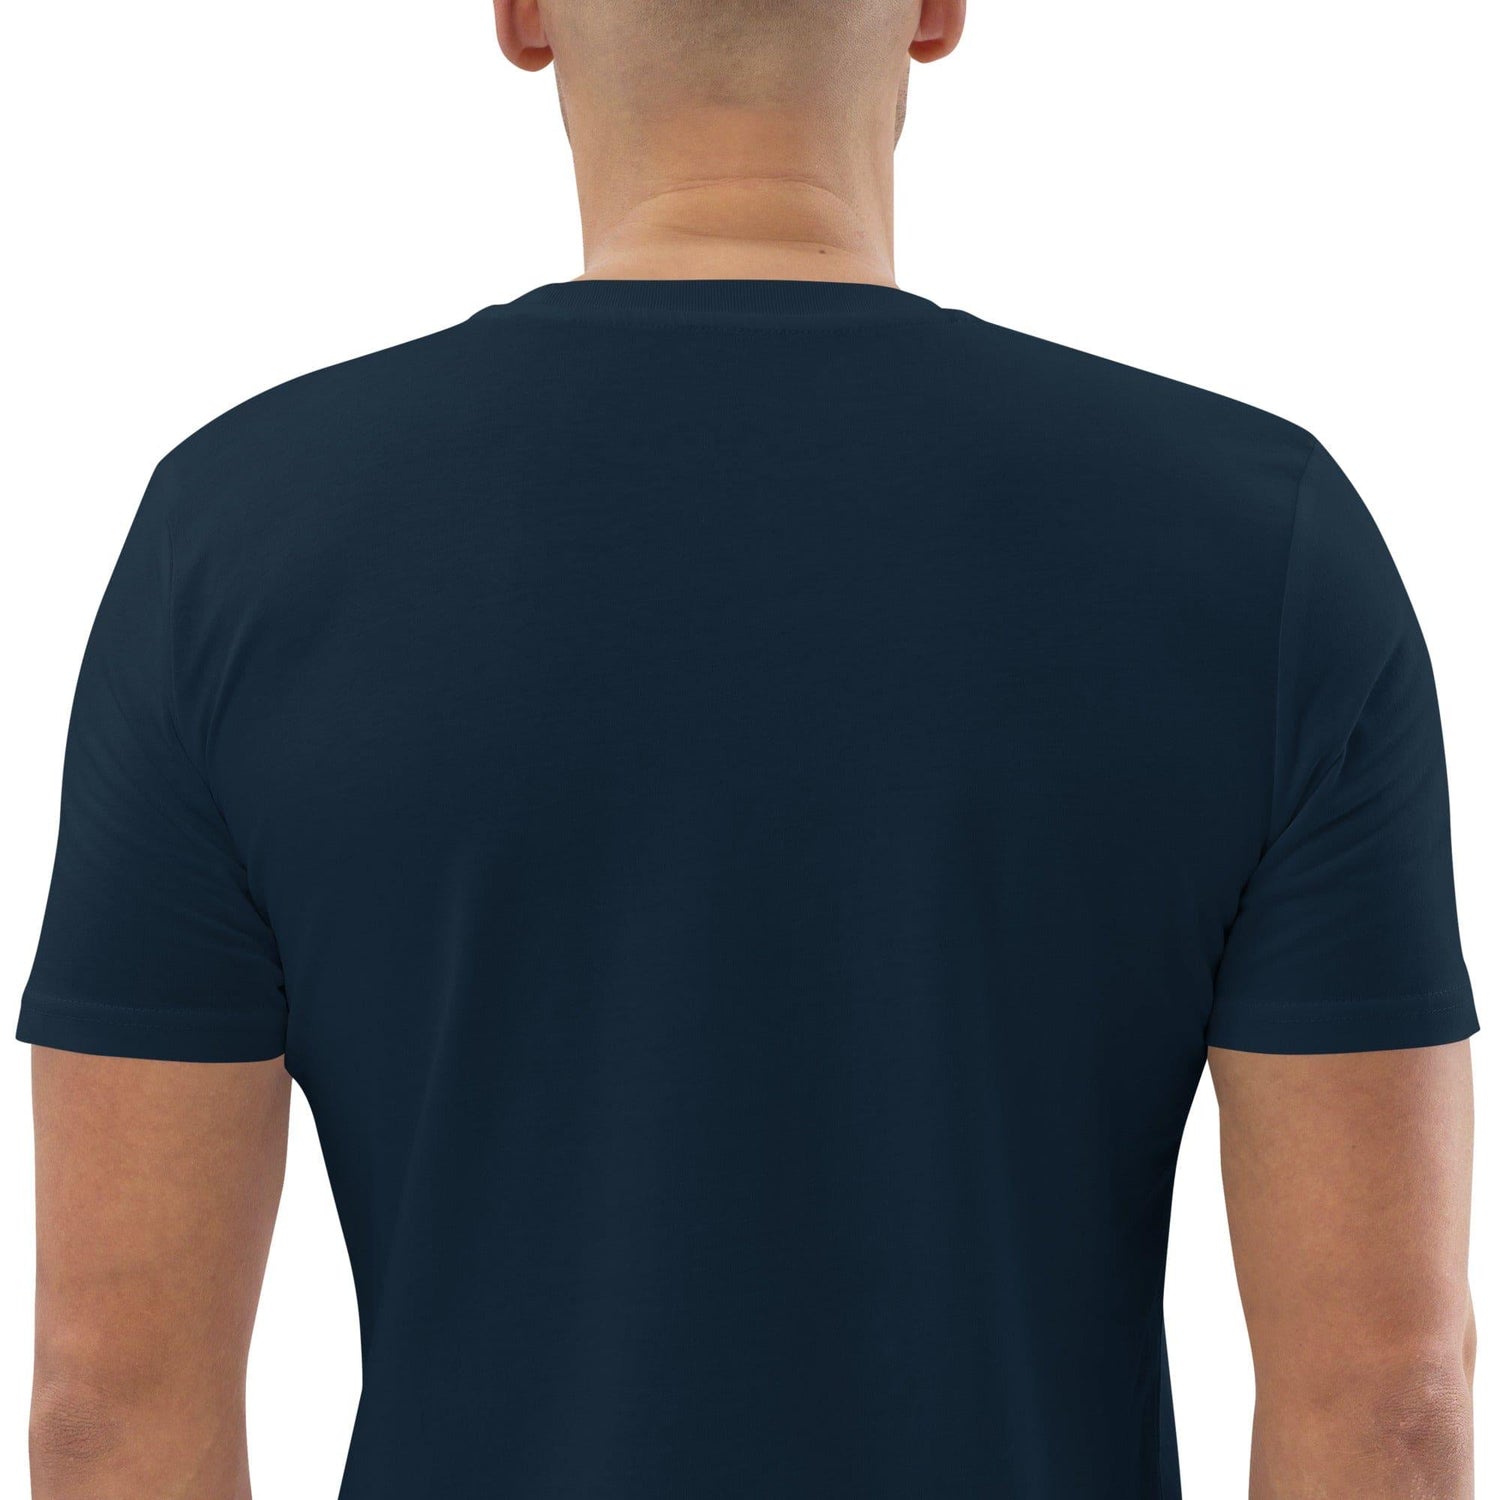 Herren T-Shirt S-5XL - Preis: € 28.79 - BUYATHOME24 Germany